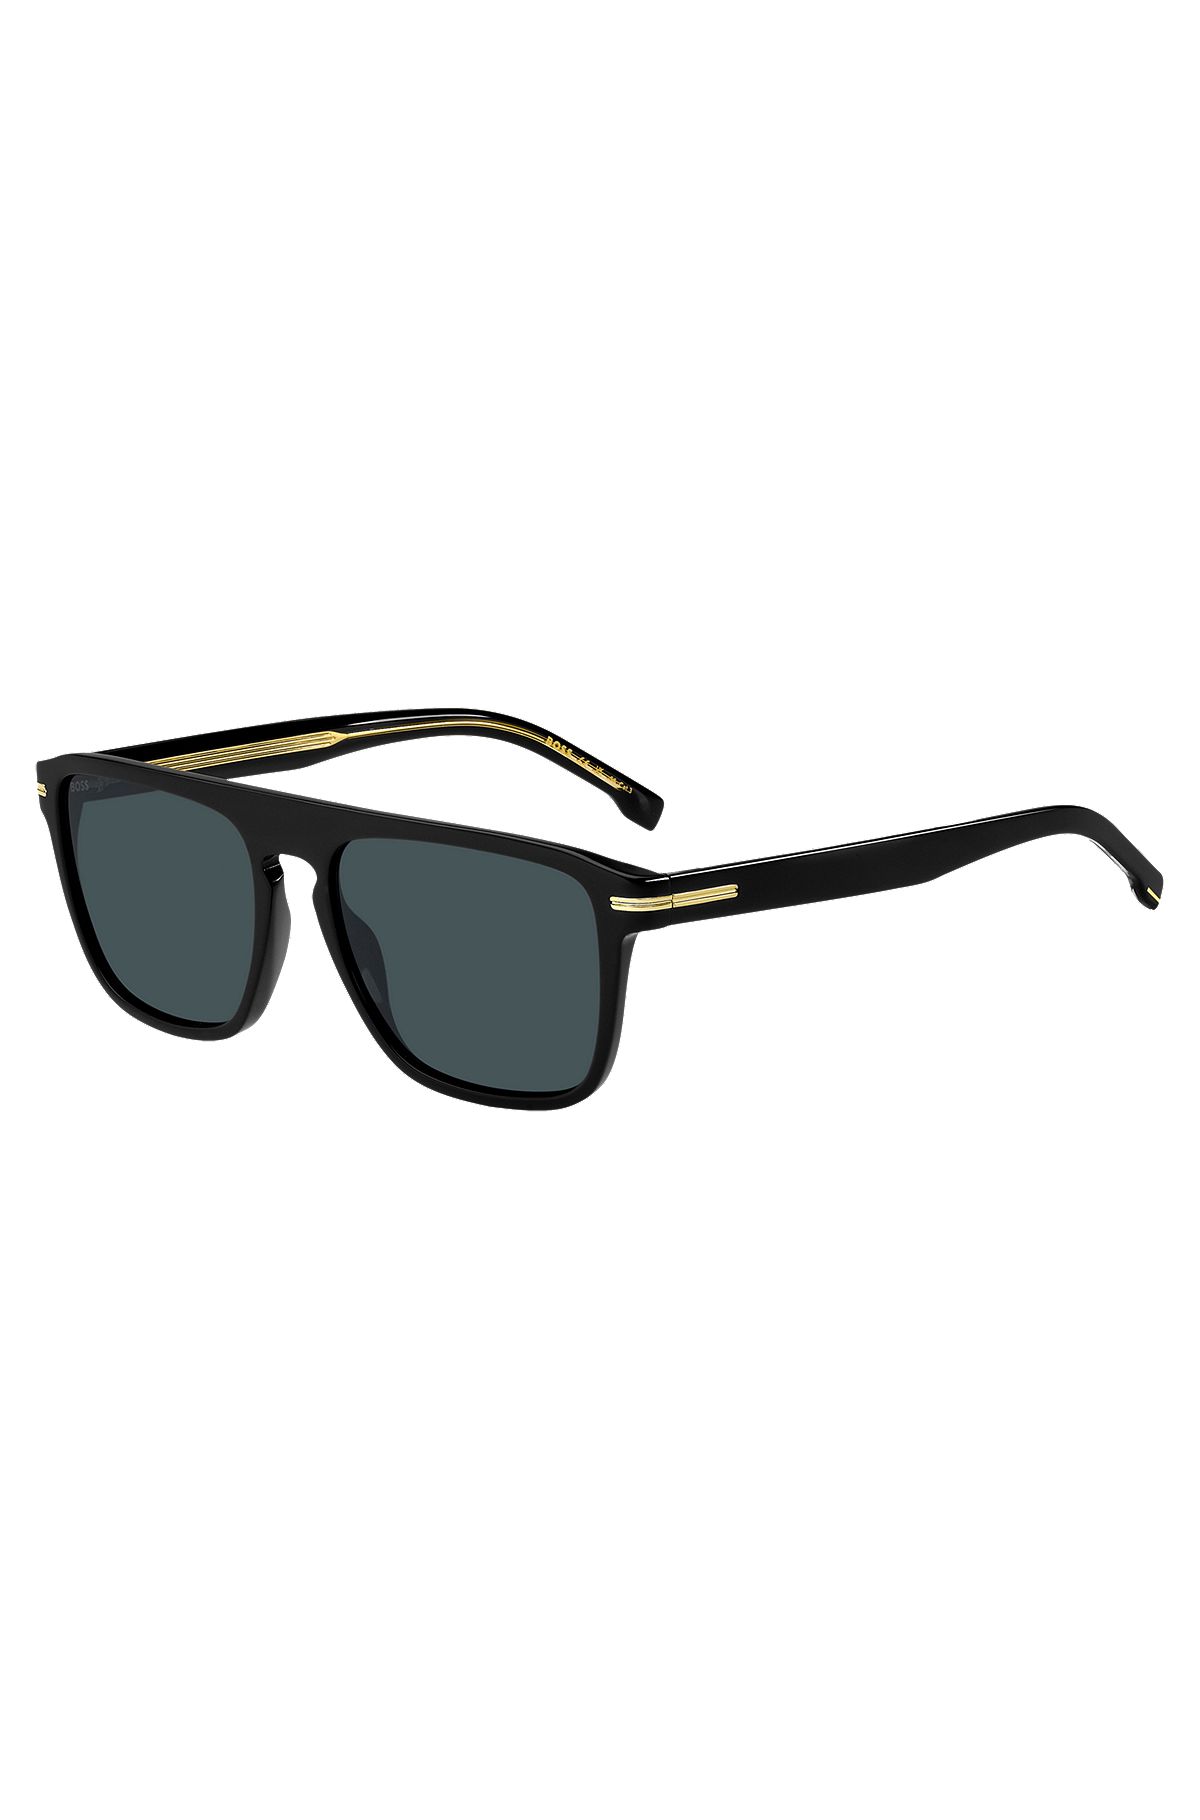 Black-acetate sunglasses with gold-tone details, Black